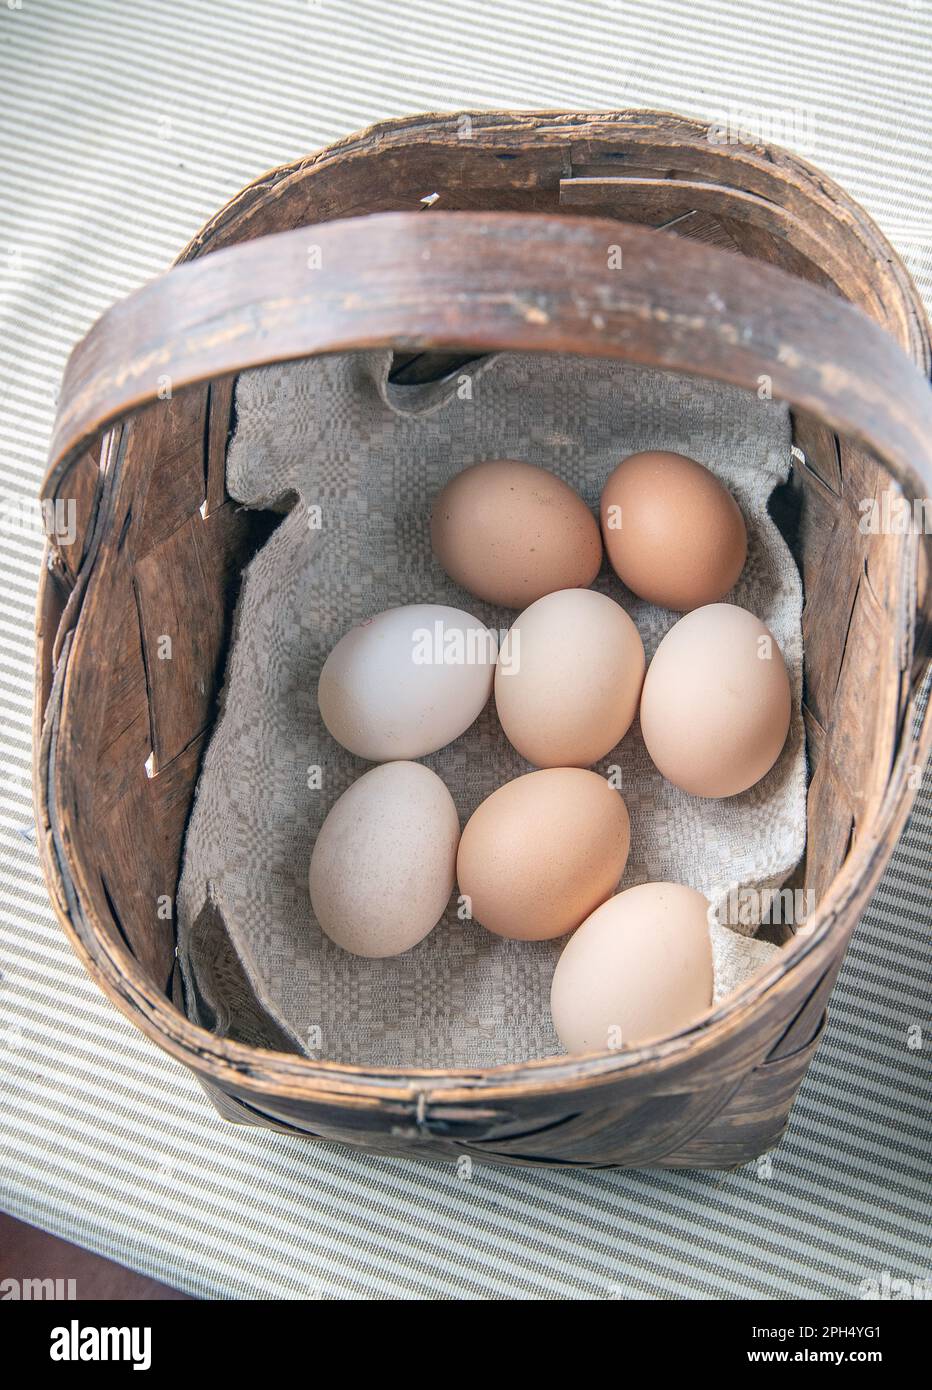 1 Set Chicken Egg Holder Large Capacity Egg Basket Cartoon Hen